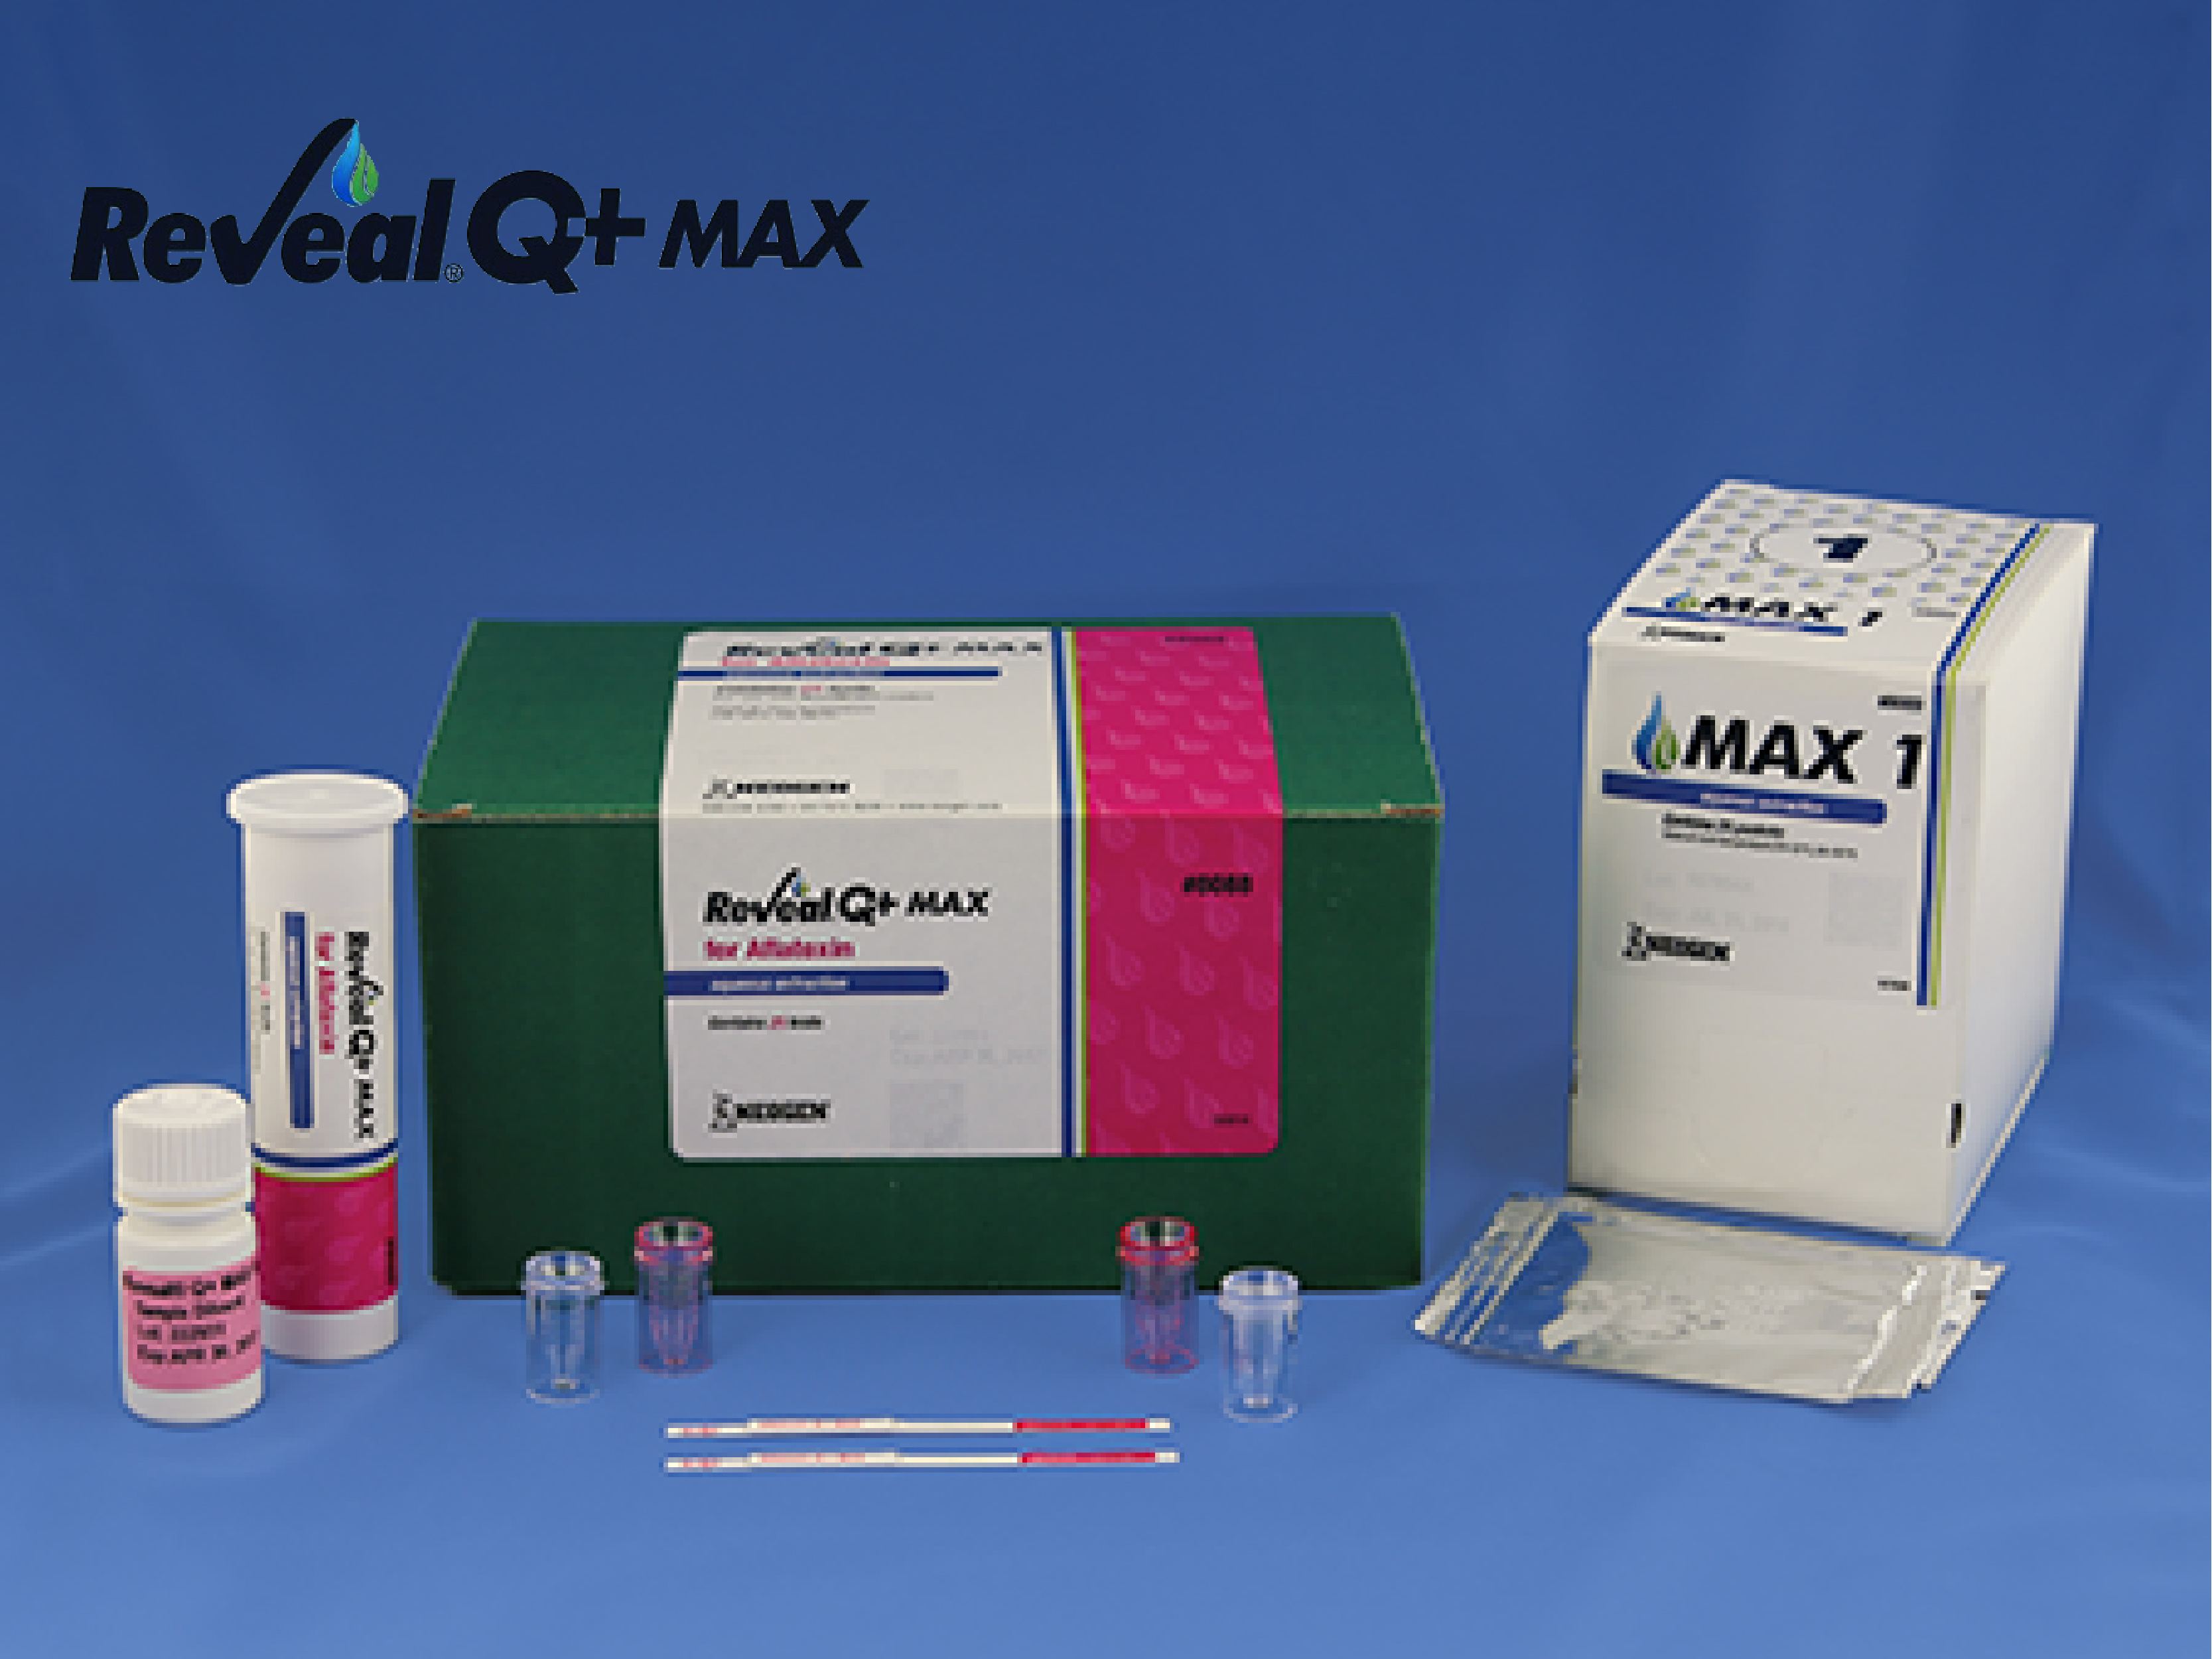 Reveal Q+ Max 系例套組 for Aflatoxin